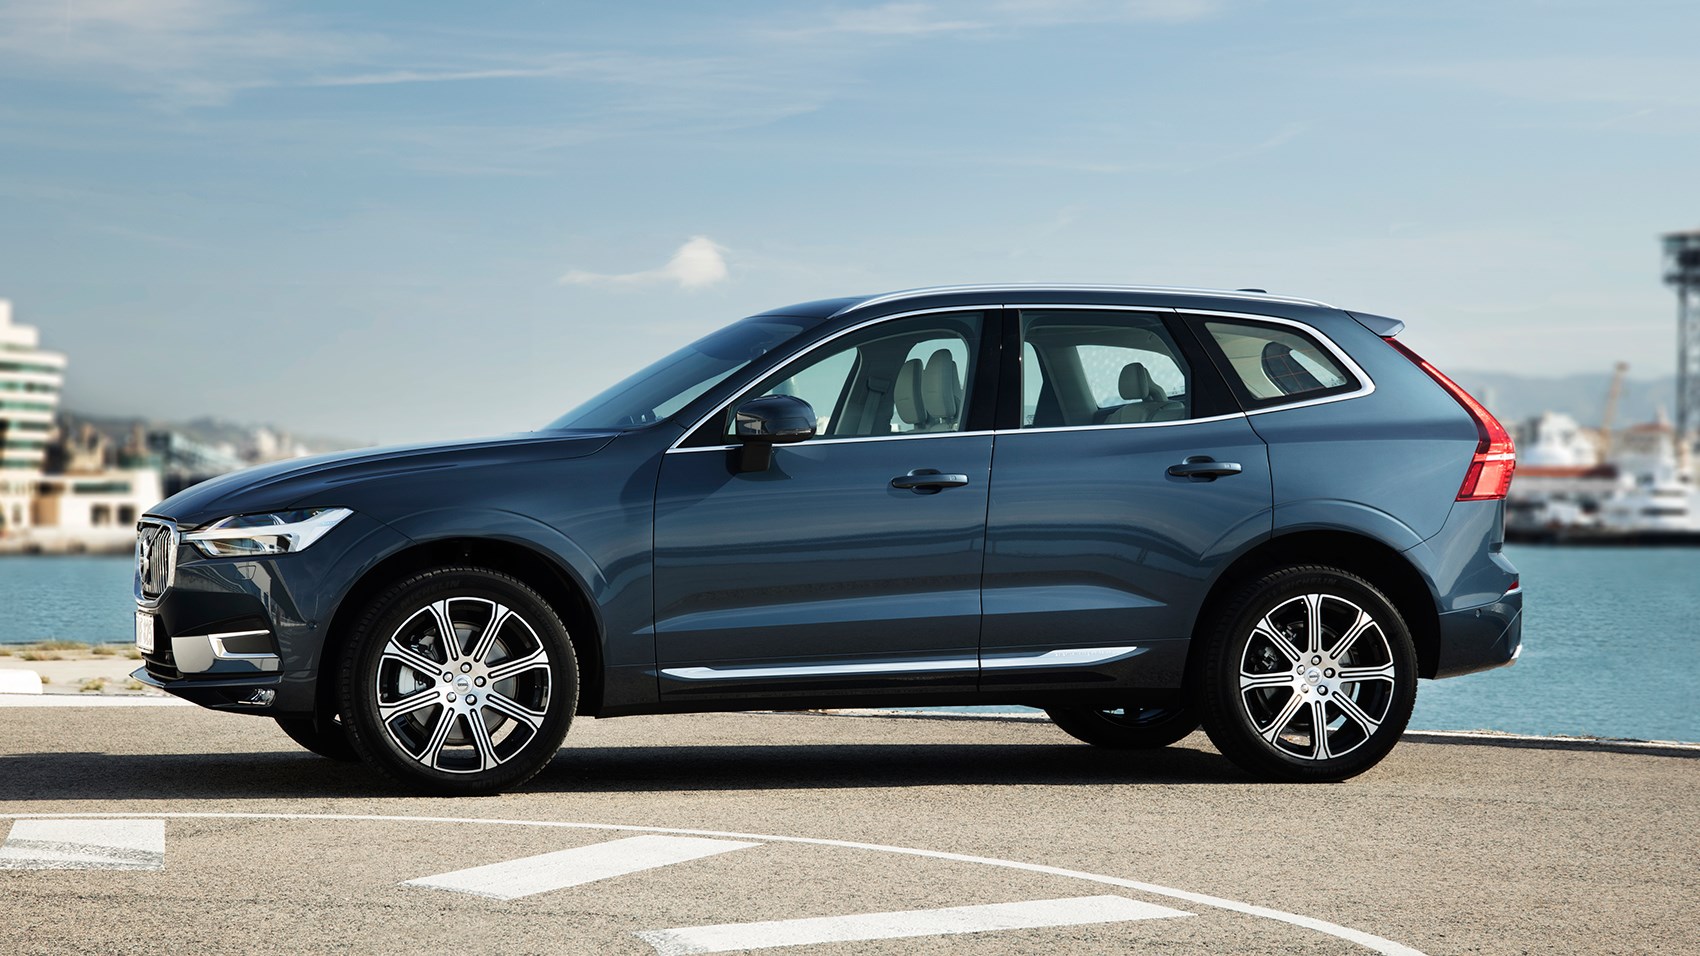 Notícia Volvo XC60 vence o prémio de "Best Premium SUV